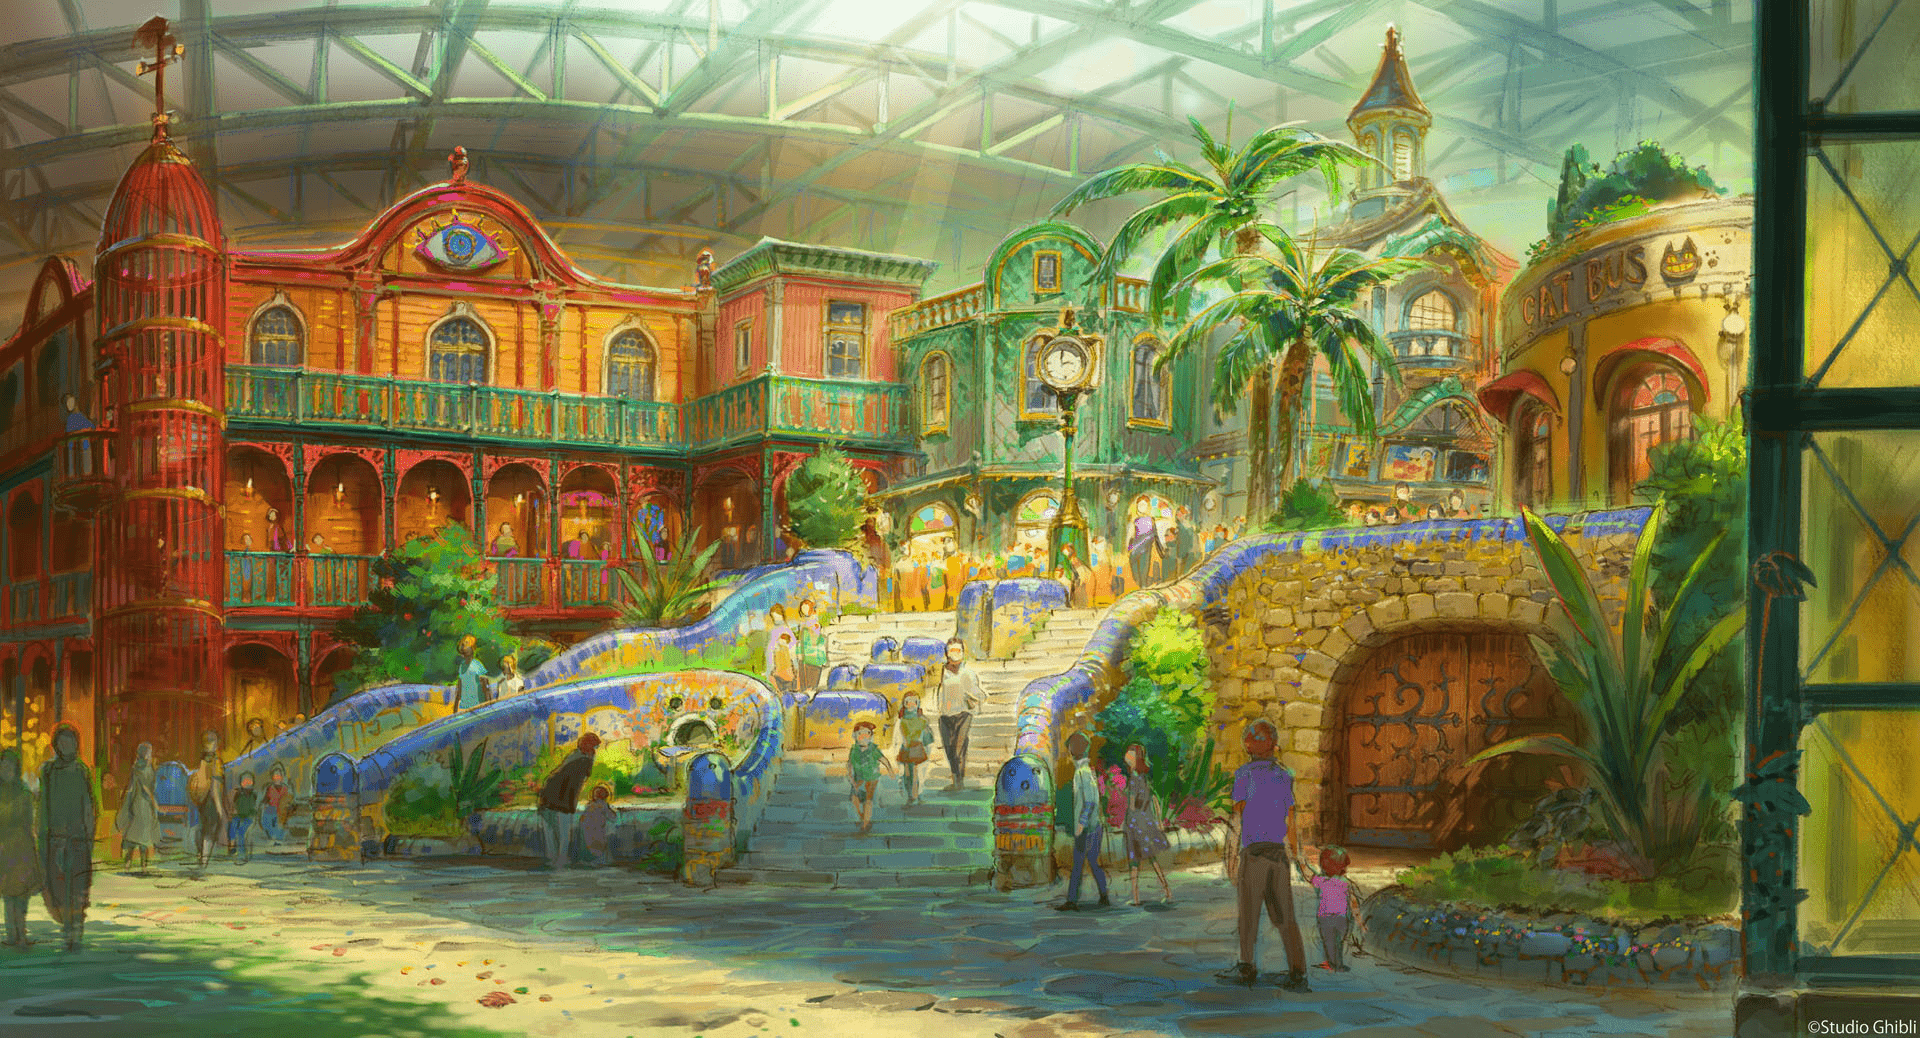 Studio Ghibli Theme Park - Ghibli's Grand Warehouse